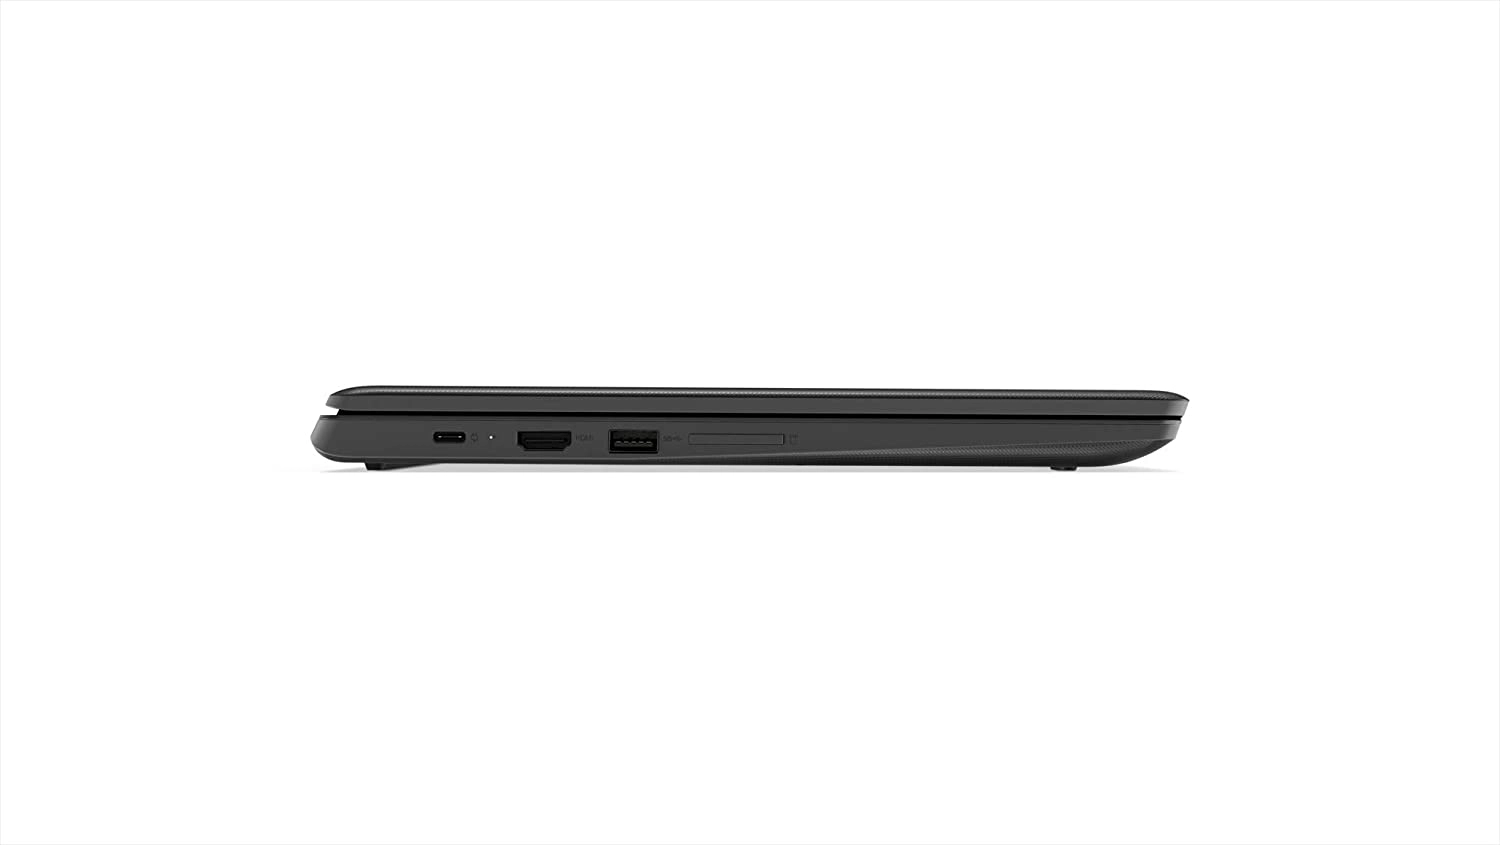 Lenovo Ideapad S330 laptop image